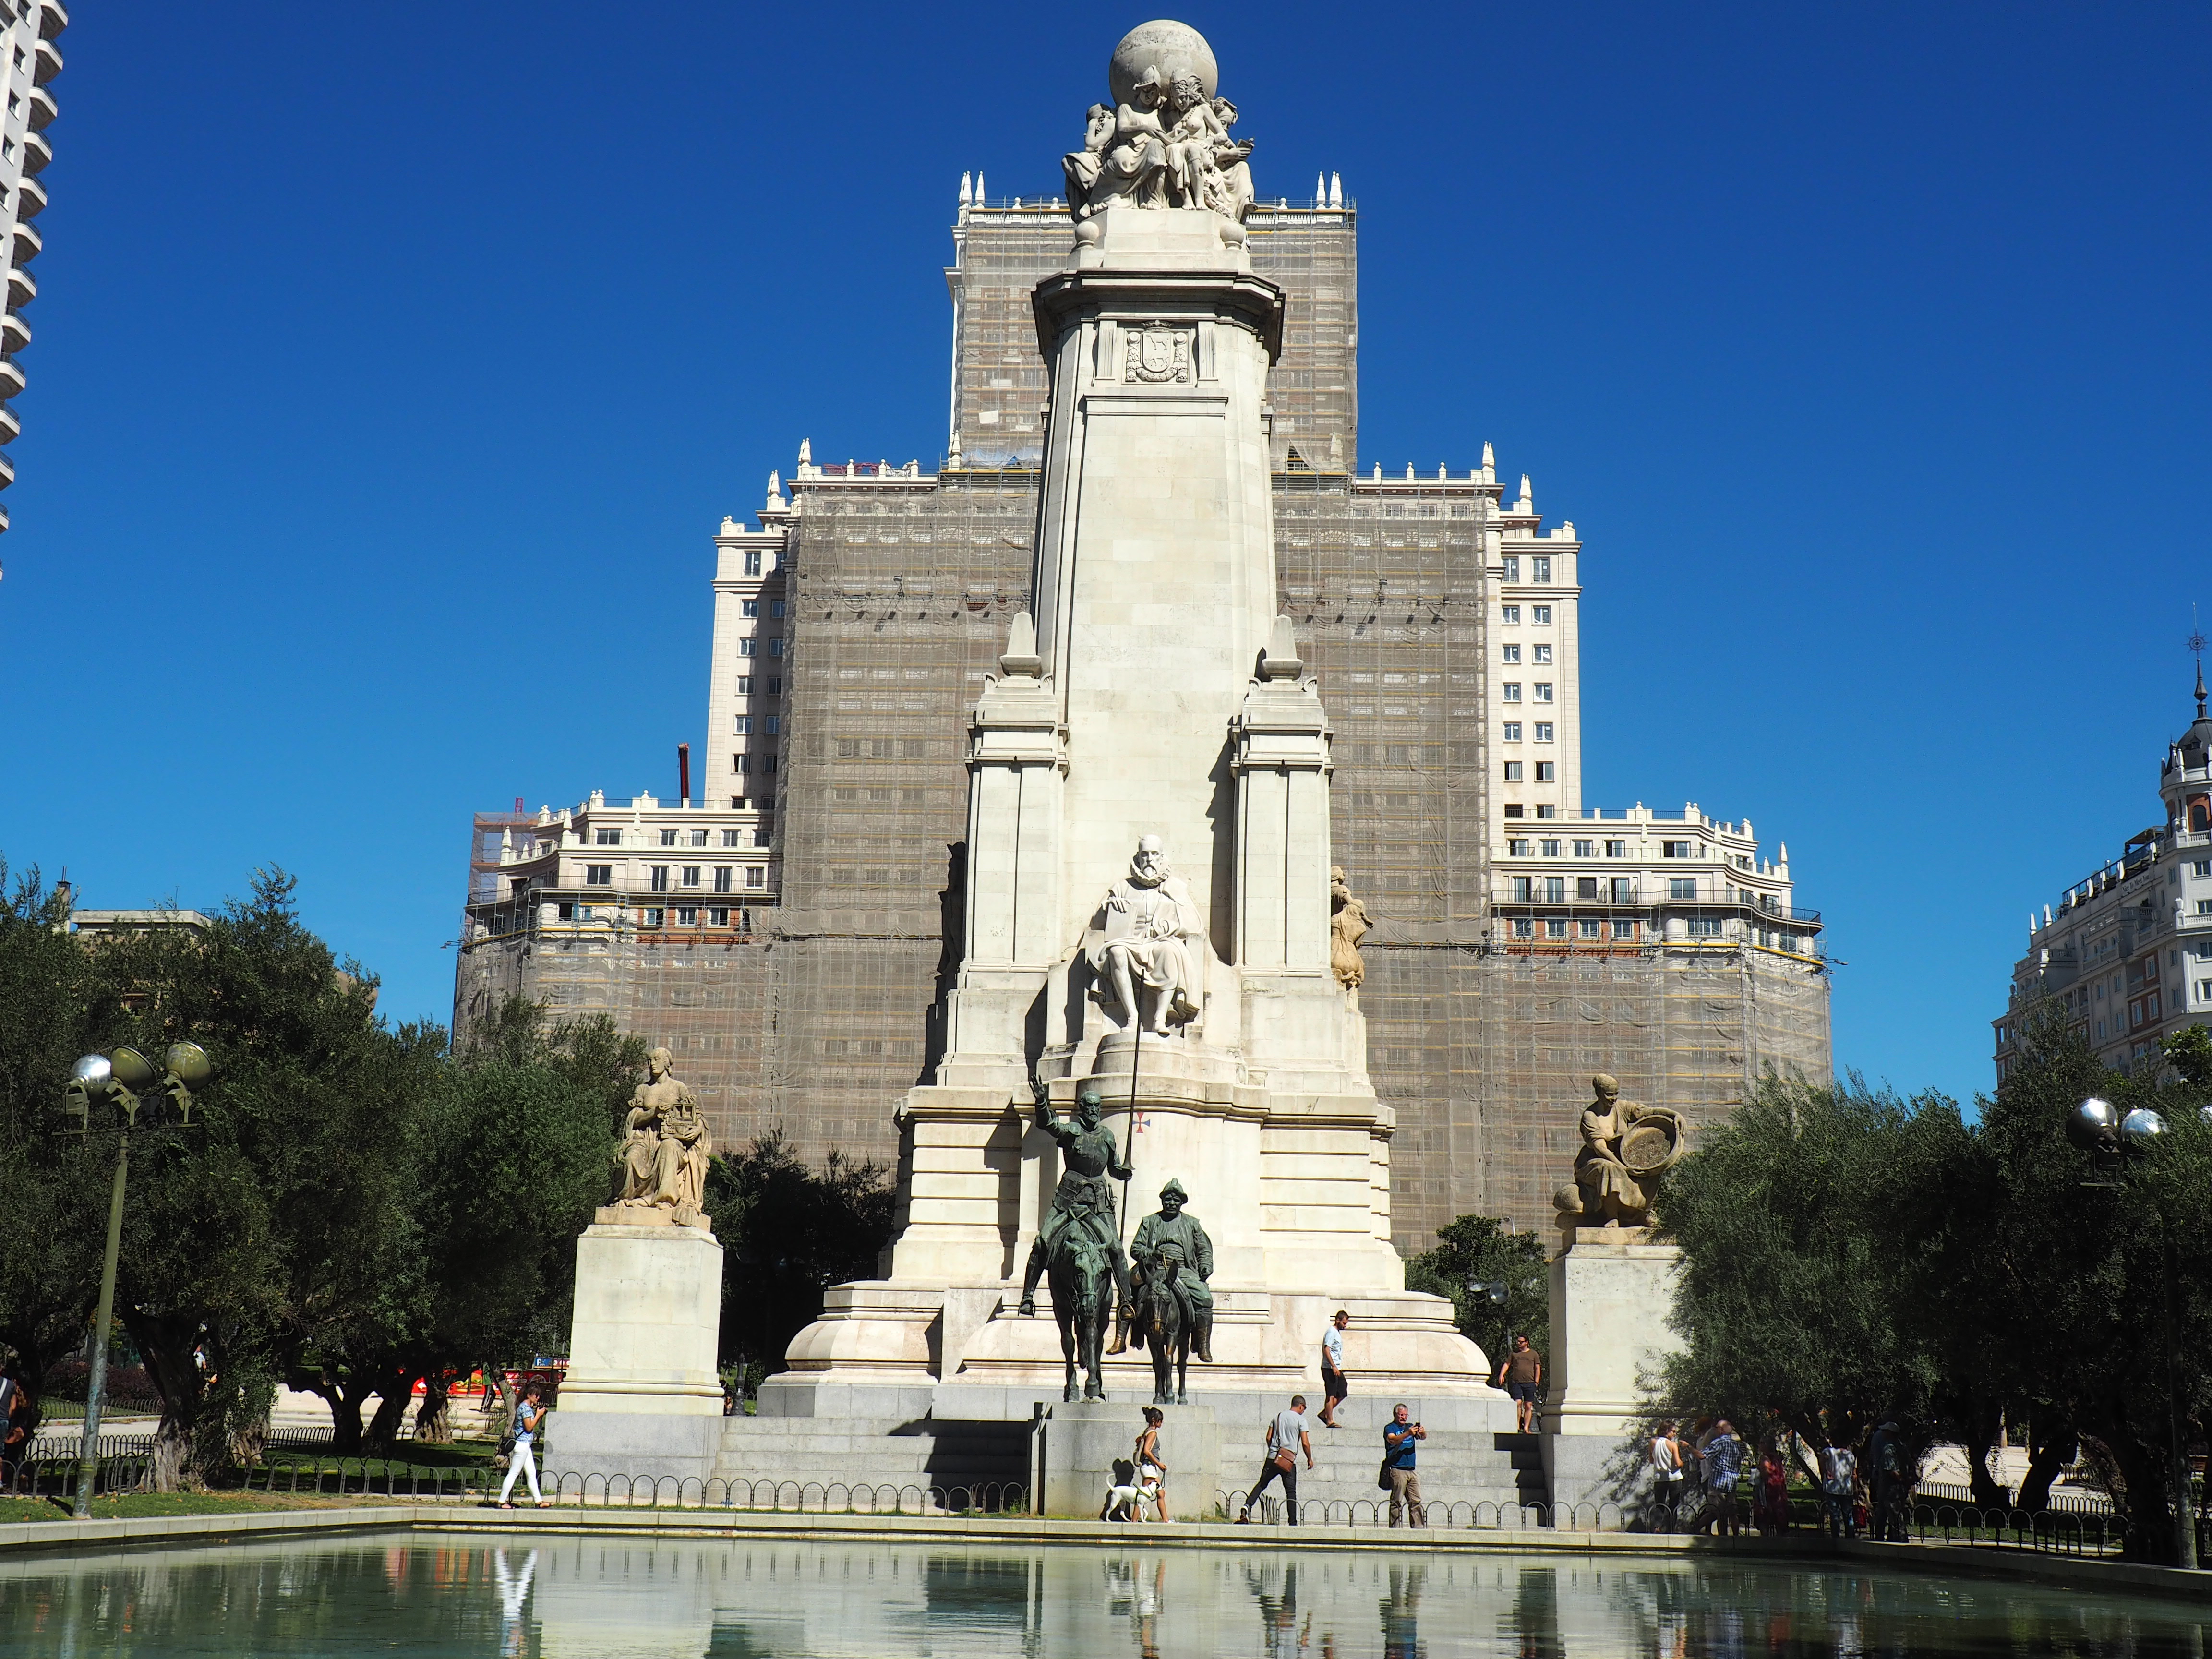 Plaza de Espana in Madrid